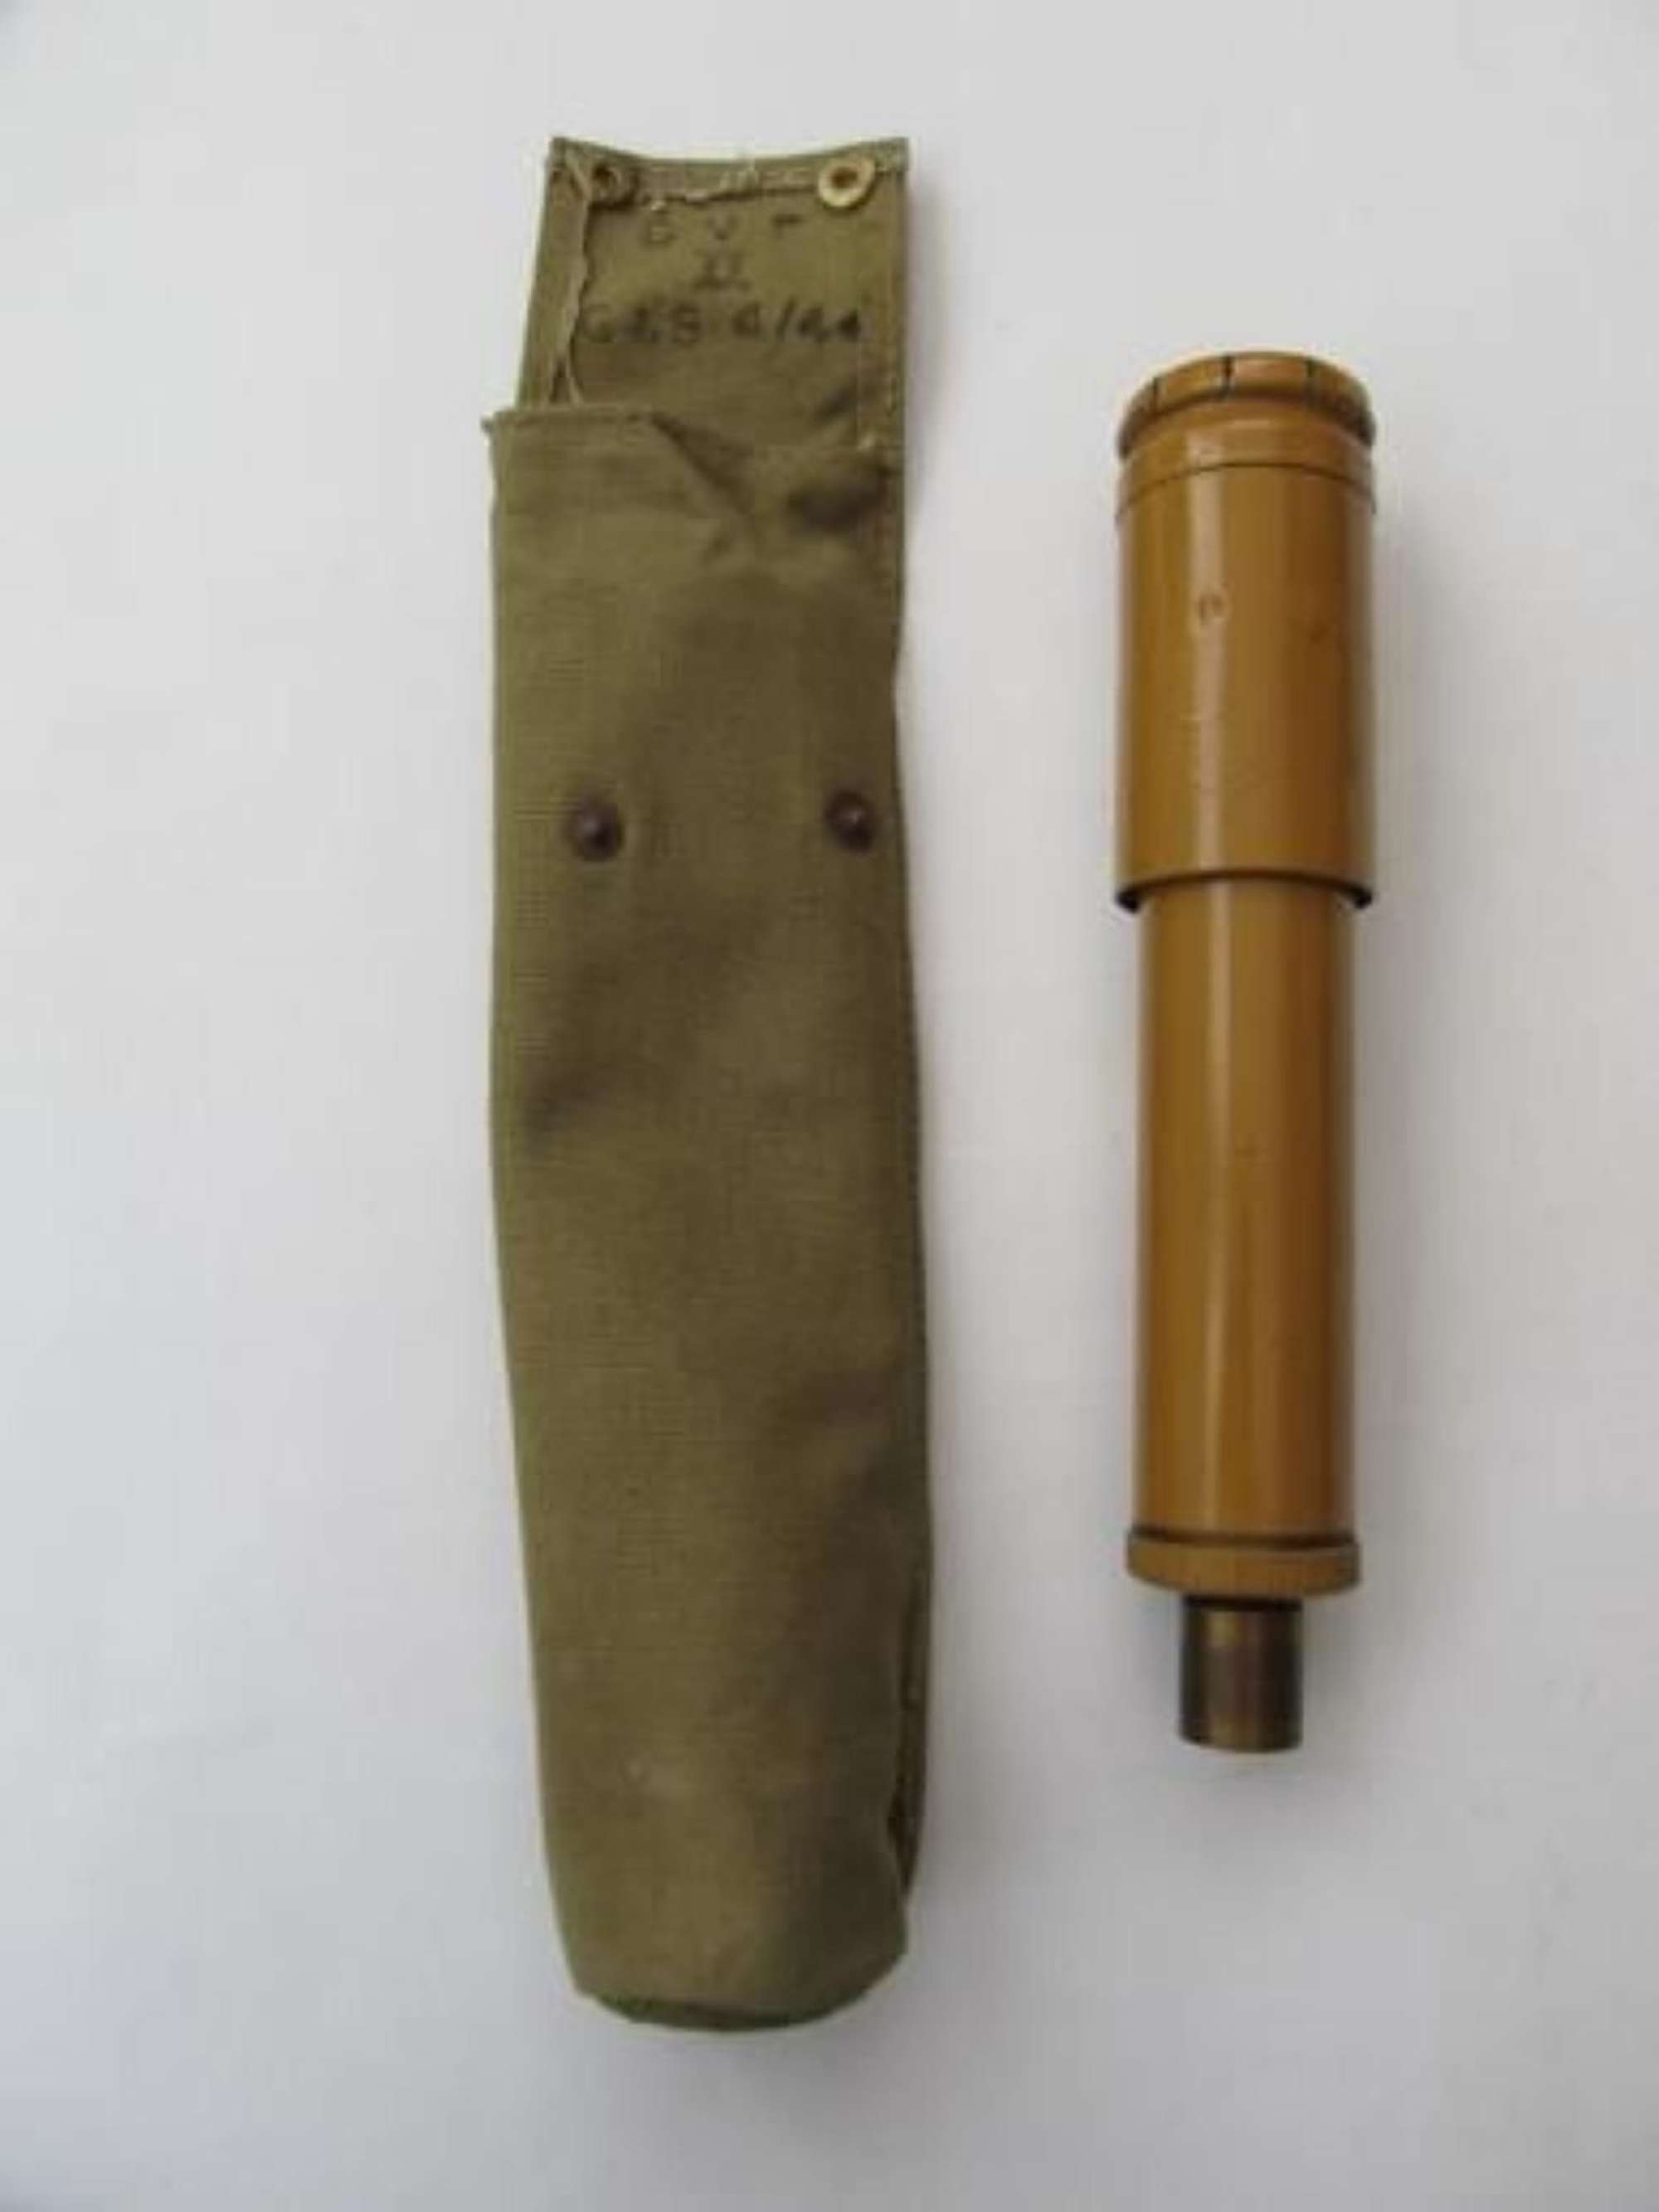 Rare WW2 British Forces Gas Detection Pump